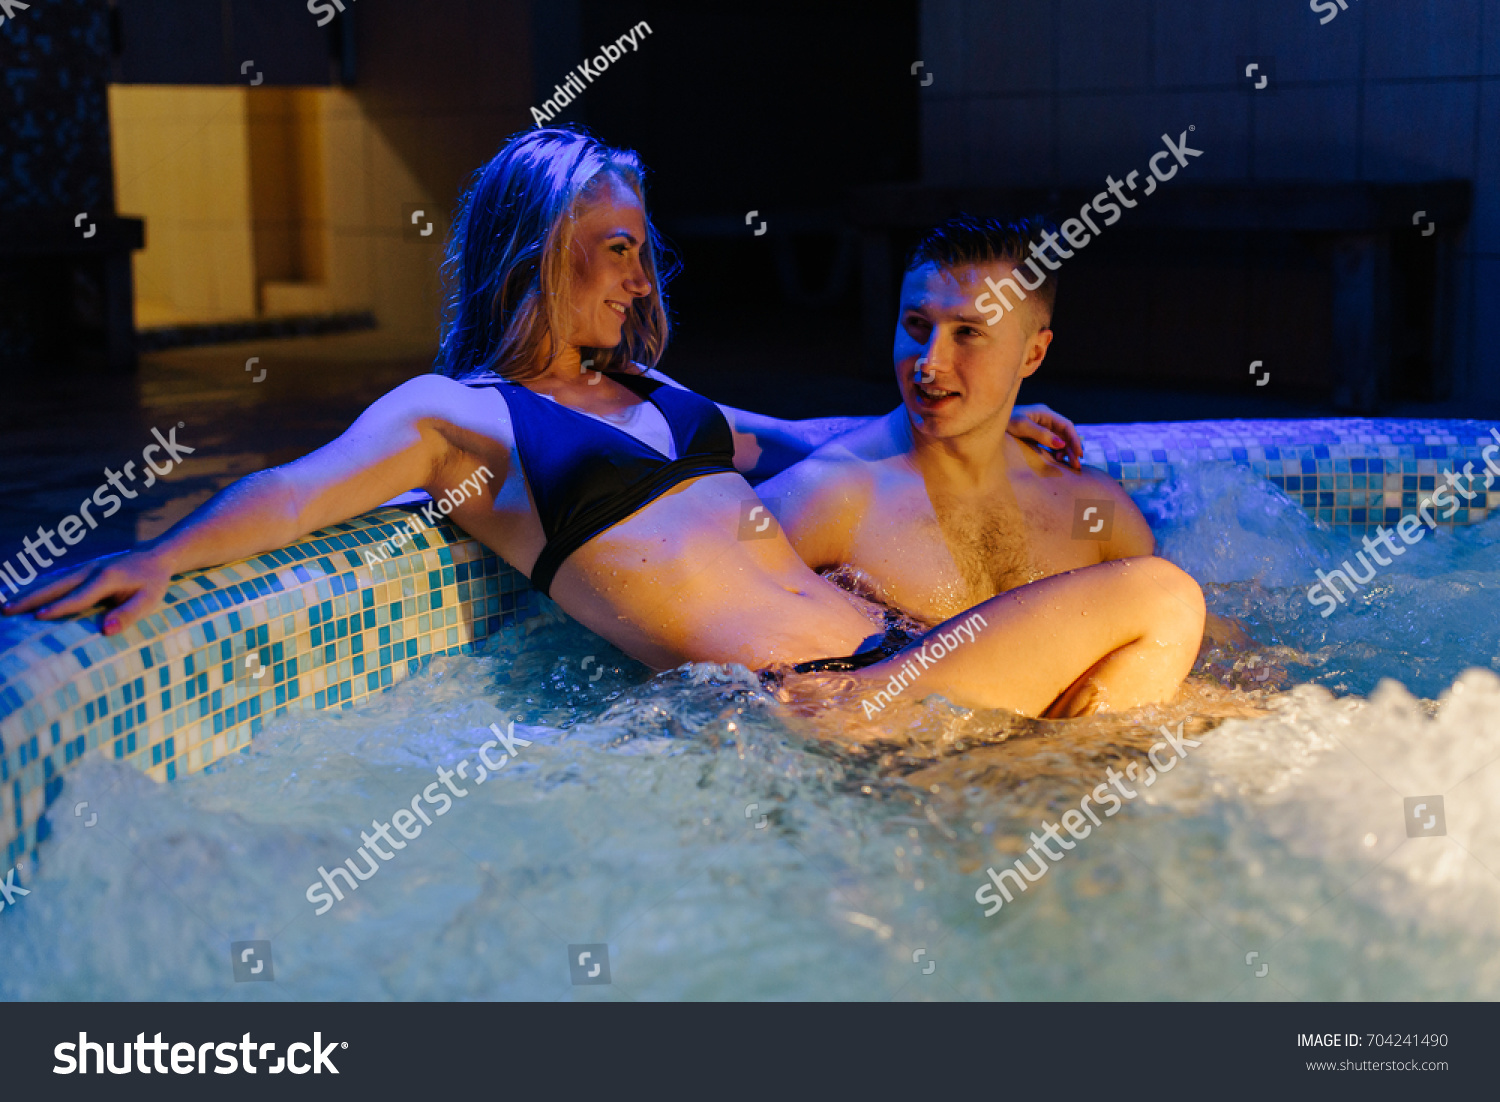 Sexy Hot Tub Story Hot Hand